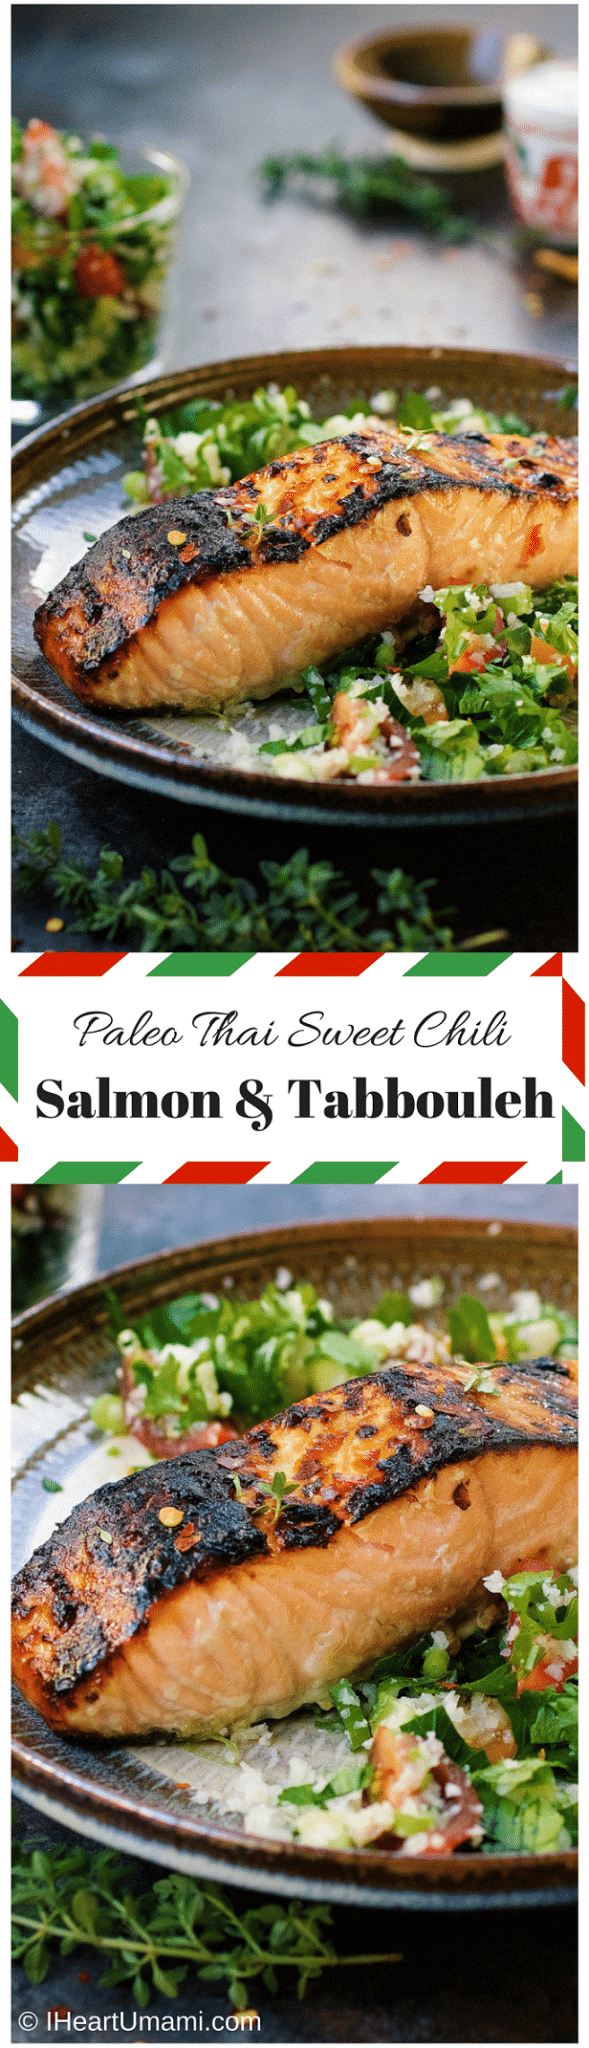 Paleo Thai Sweet Chili Salmon Tabbouleh. Paleo baked salmon. Thai sweet chili sauce. Paleo Tabbouleh. Paleo tabouli. IHeartUmami.com